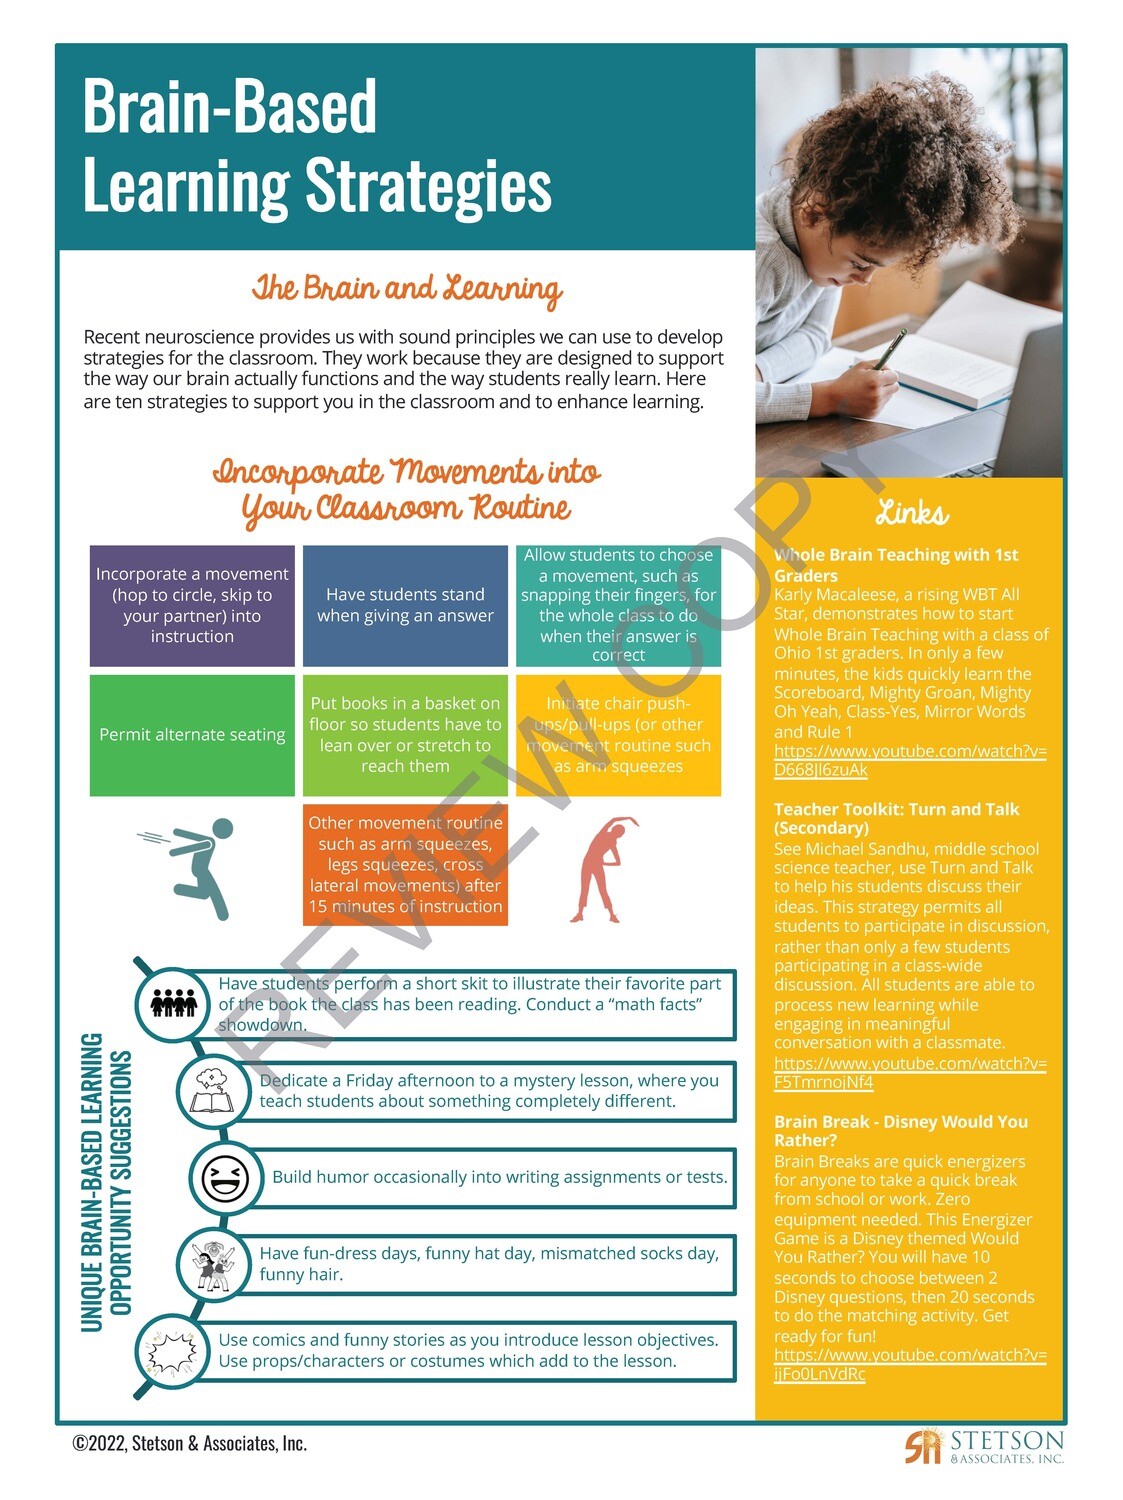 Brain-Based Learning Strategies Information Card